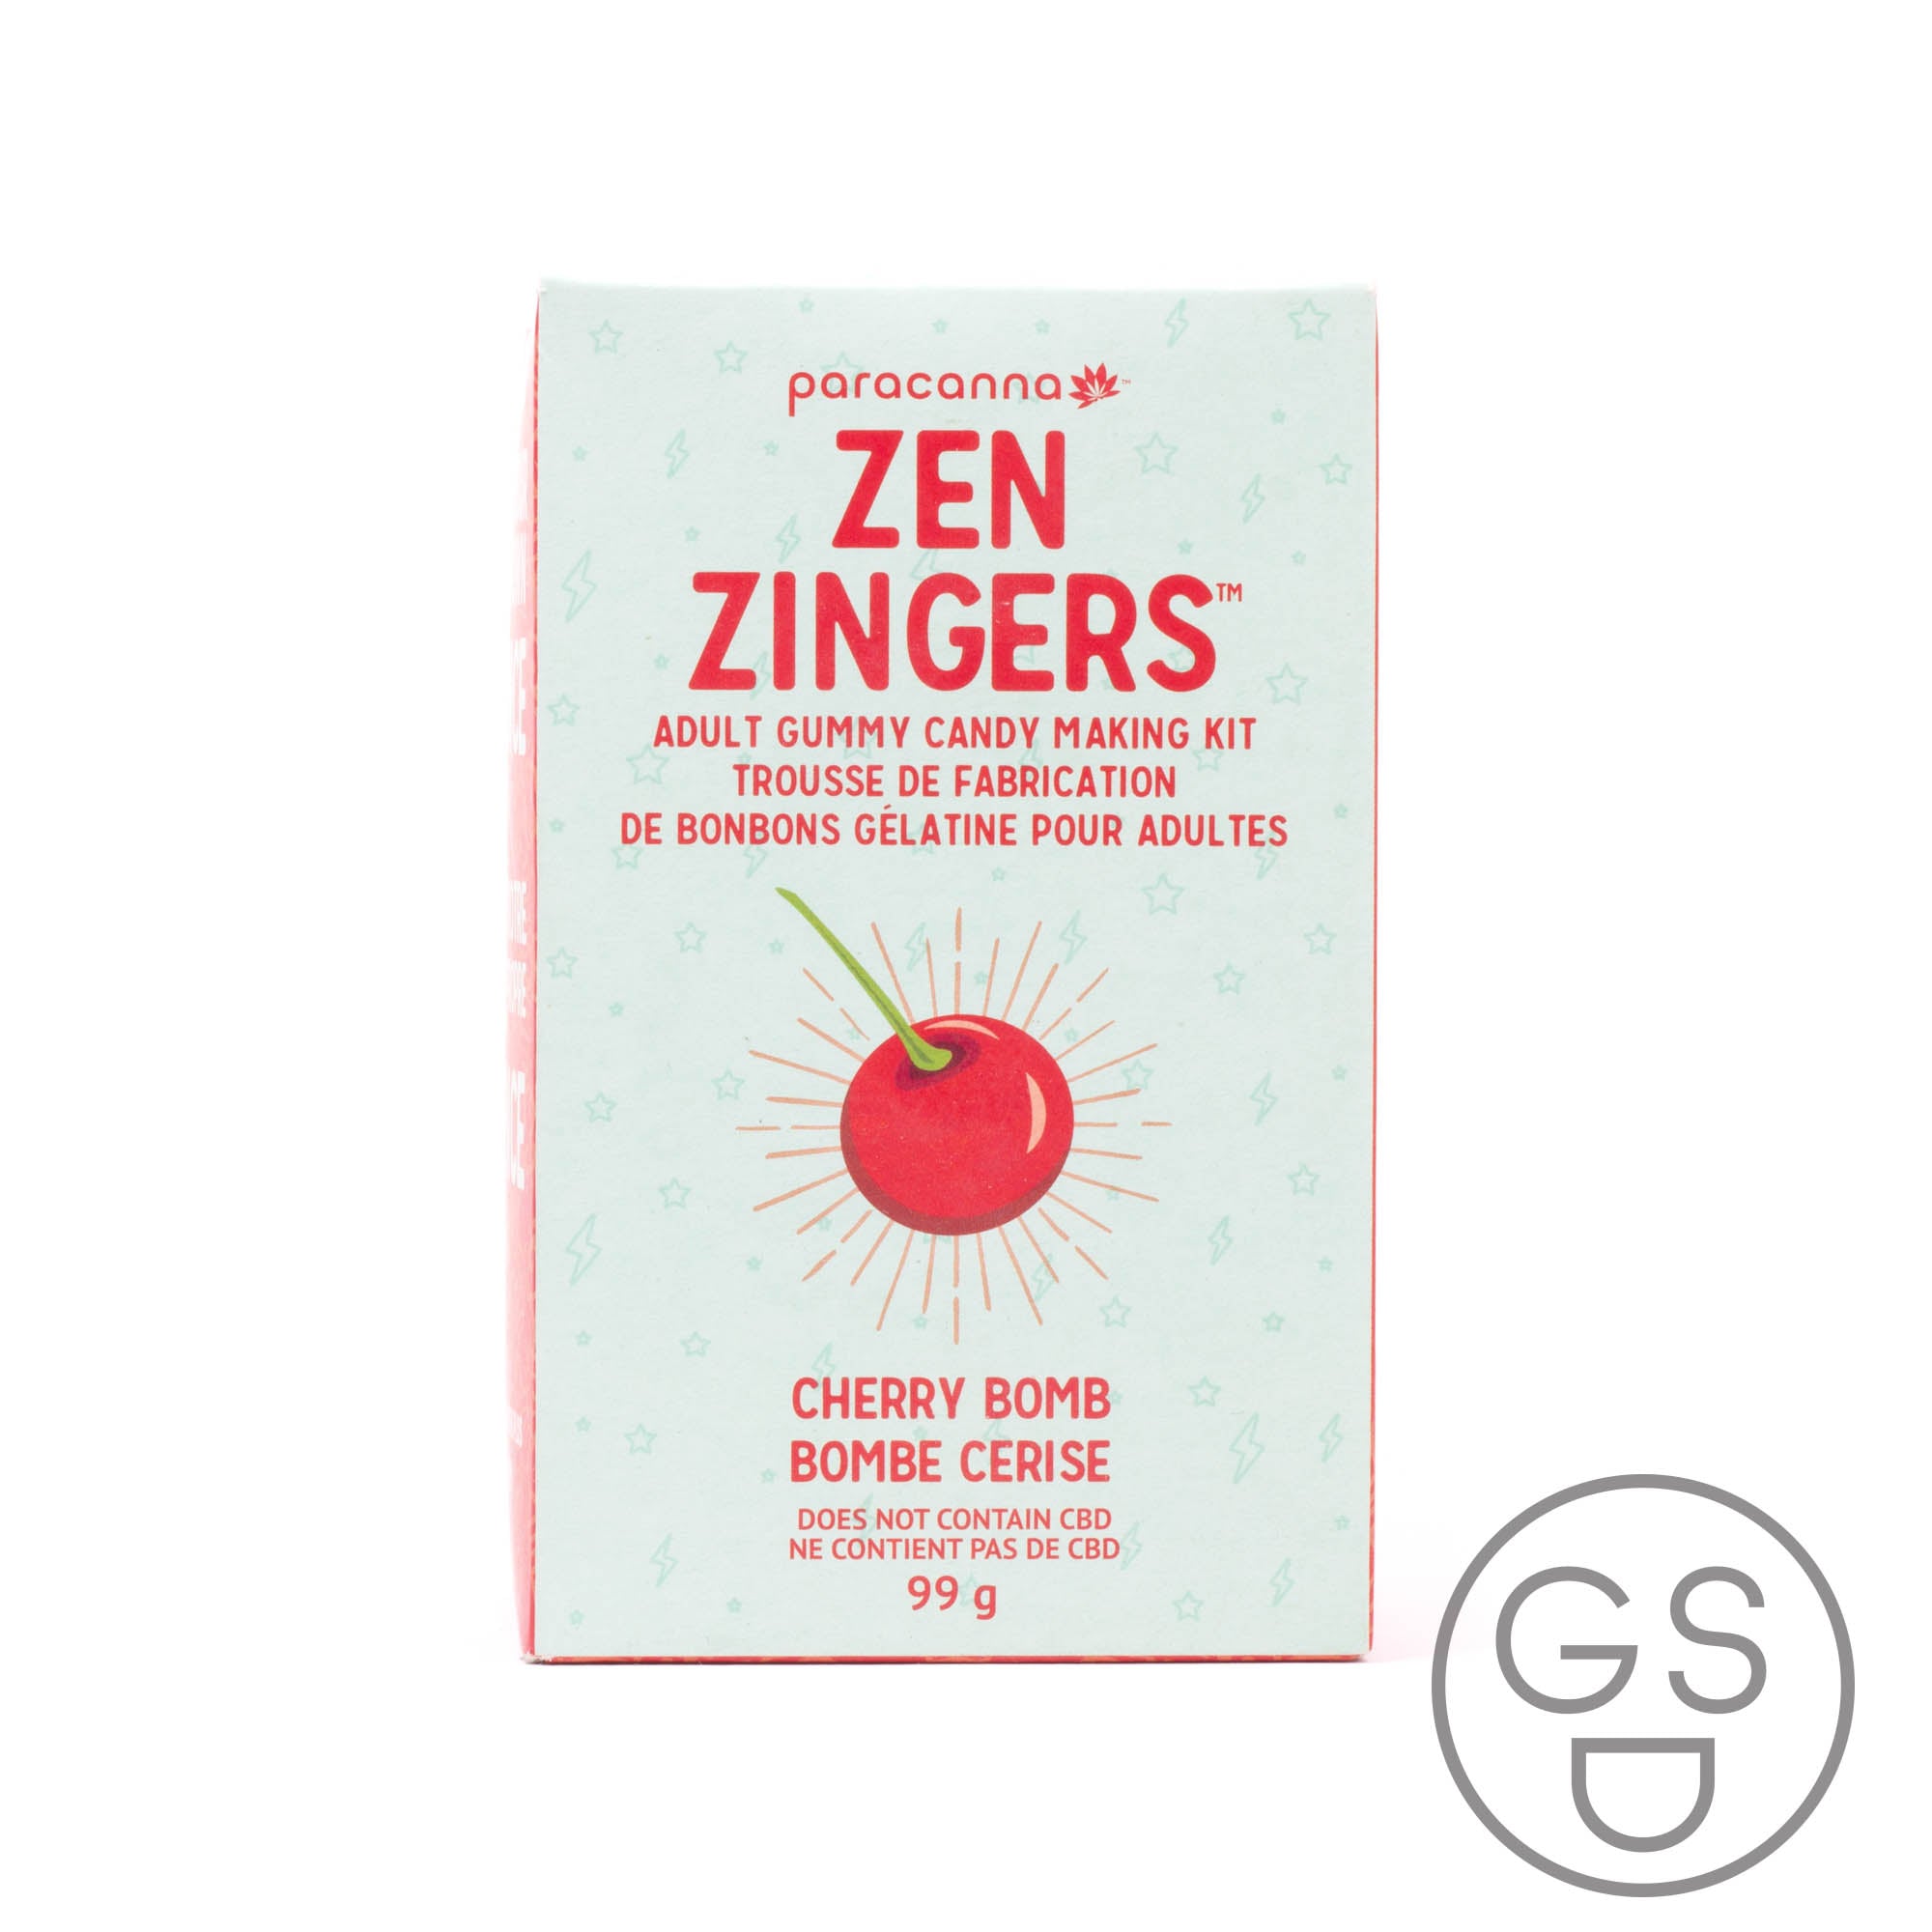 Paracanna Zen Zinger Gummy Making Kits